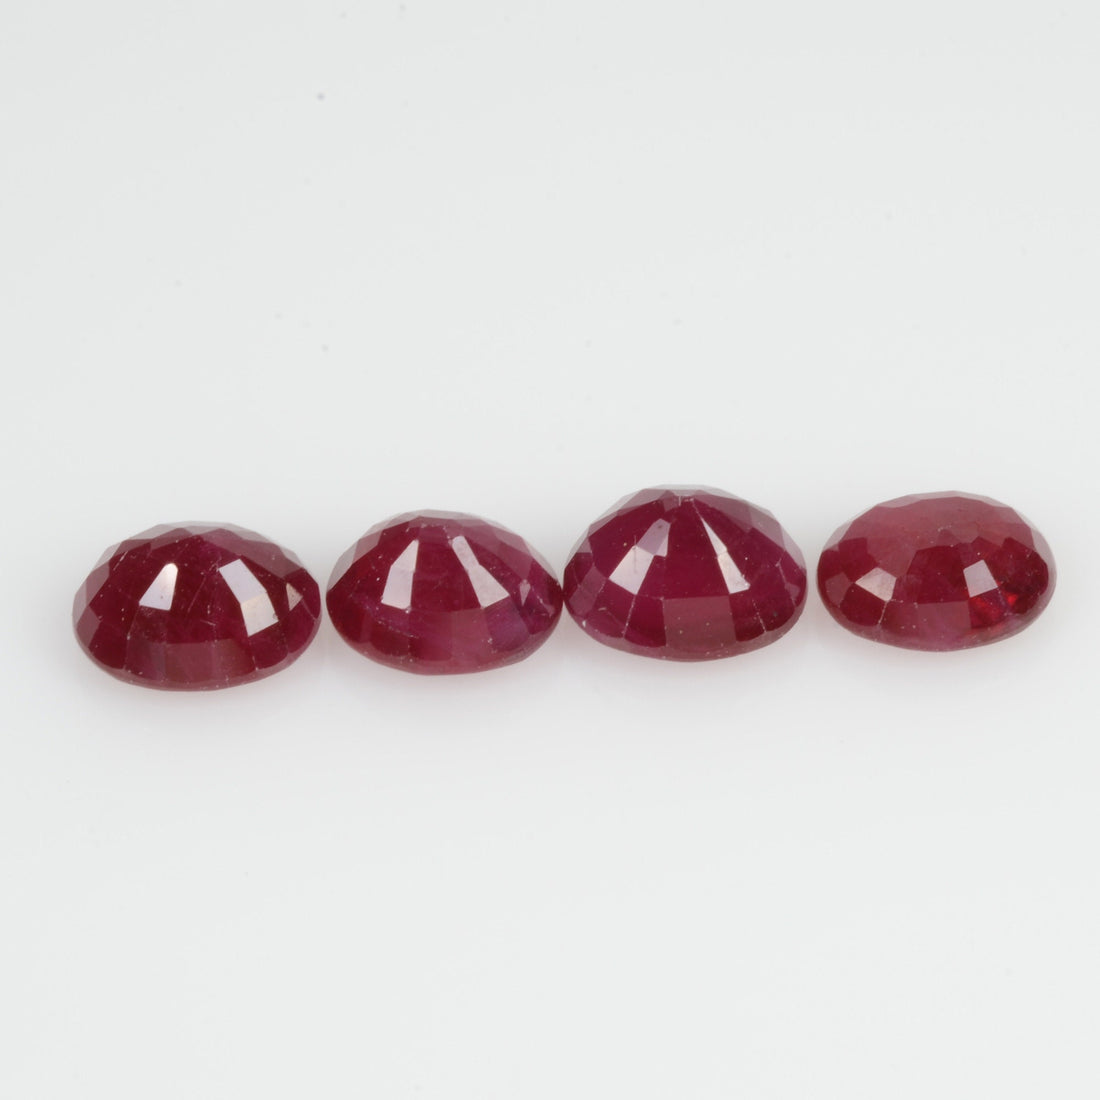 6X5 Natural Ruby Loose Gemstone Oval Cut